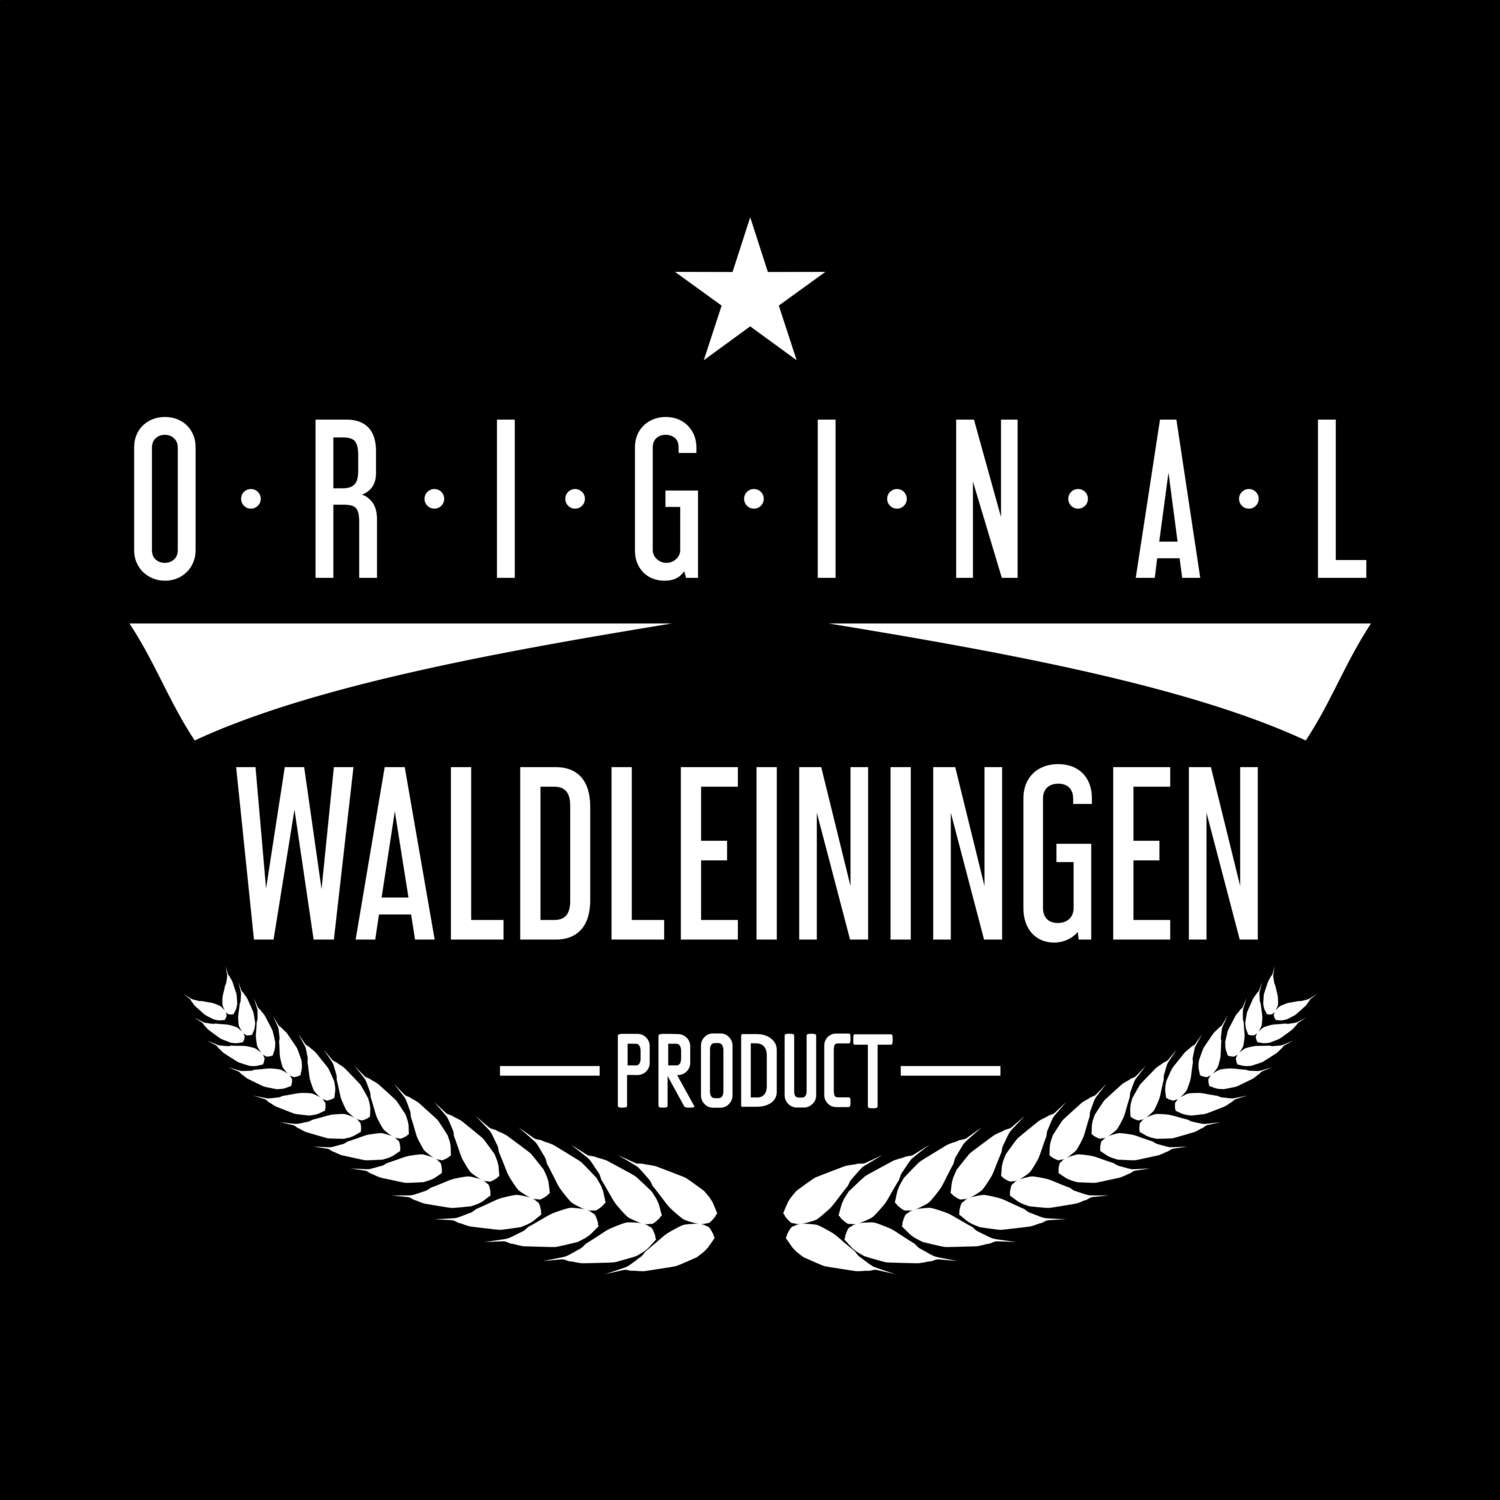 Waldleiningen T-Shirt »Original Product«